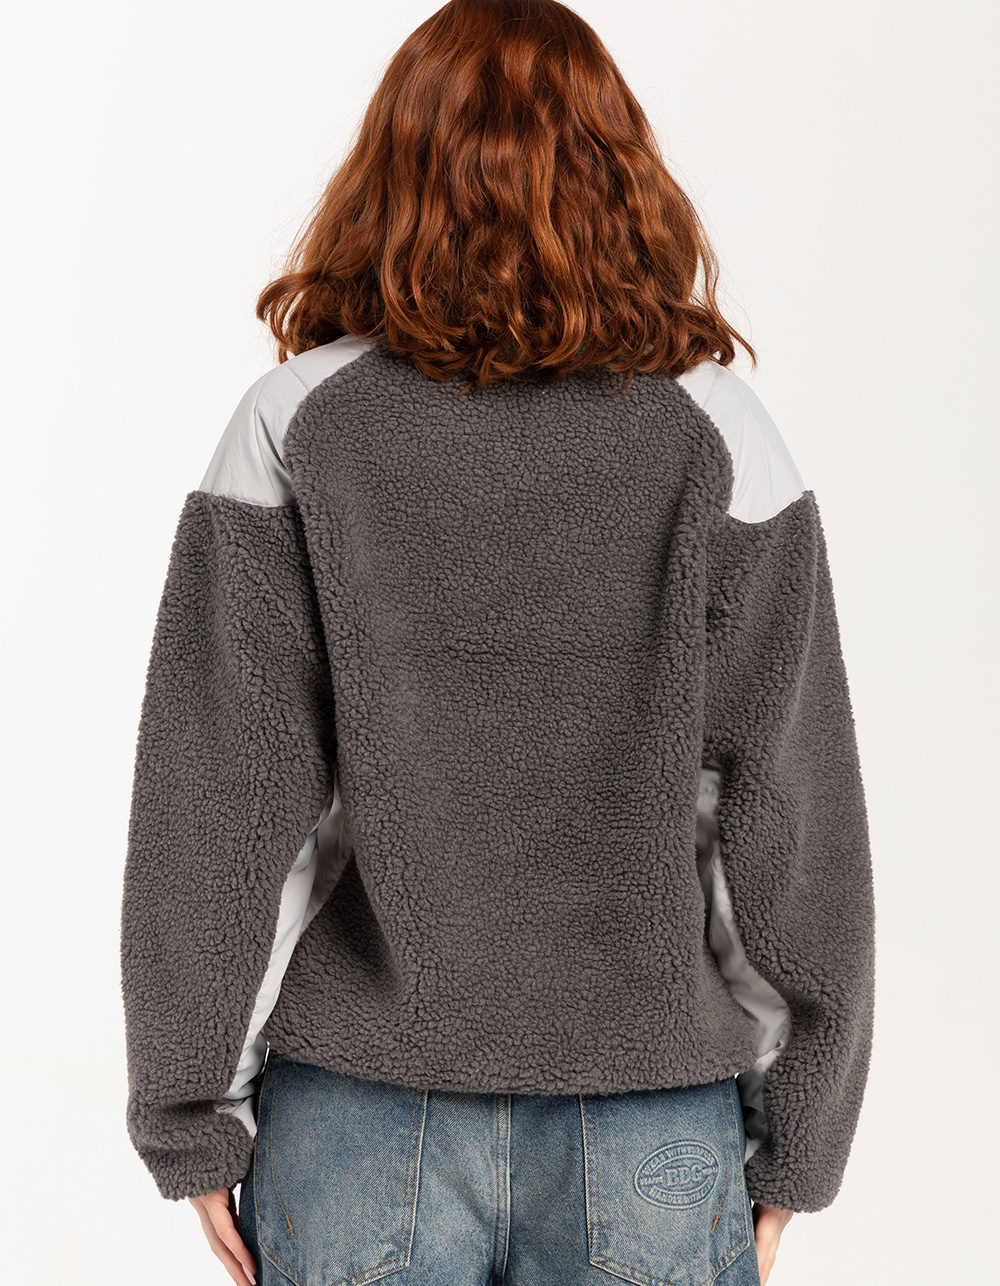 IETS FRANS Reversible Borg Fleece Womens Jacket - GRAY COMBO | Tillys